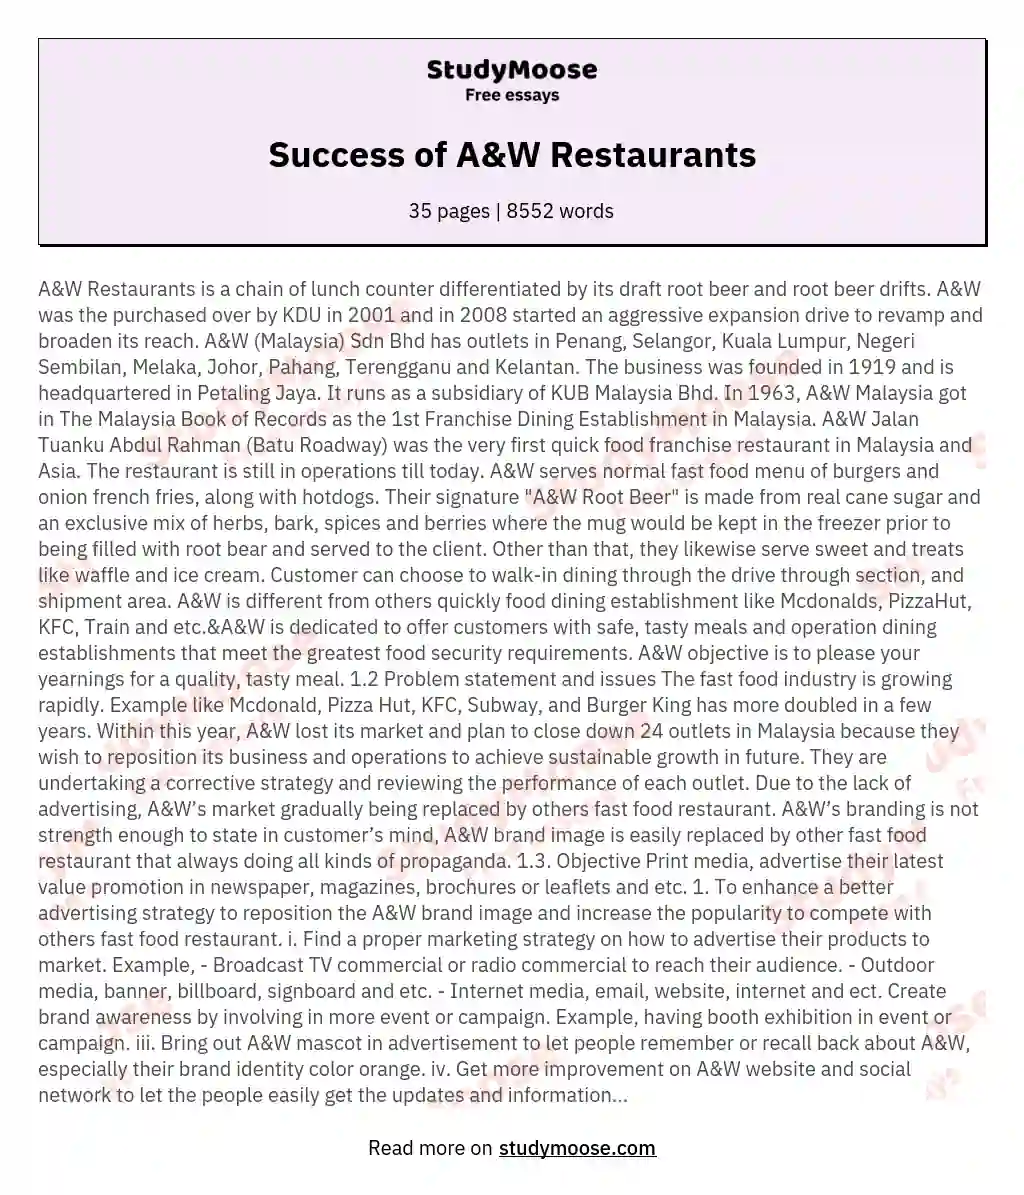 Success of A&W Restaurants essay